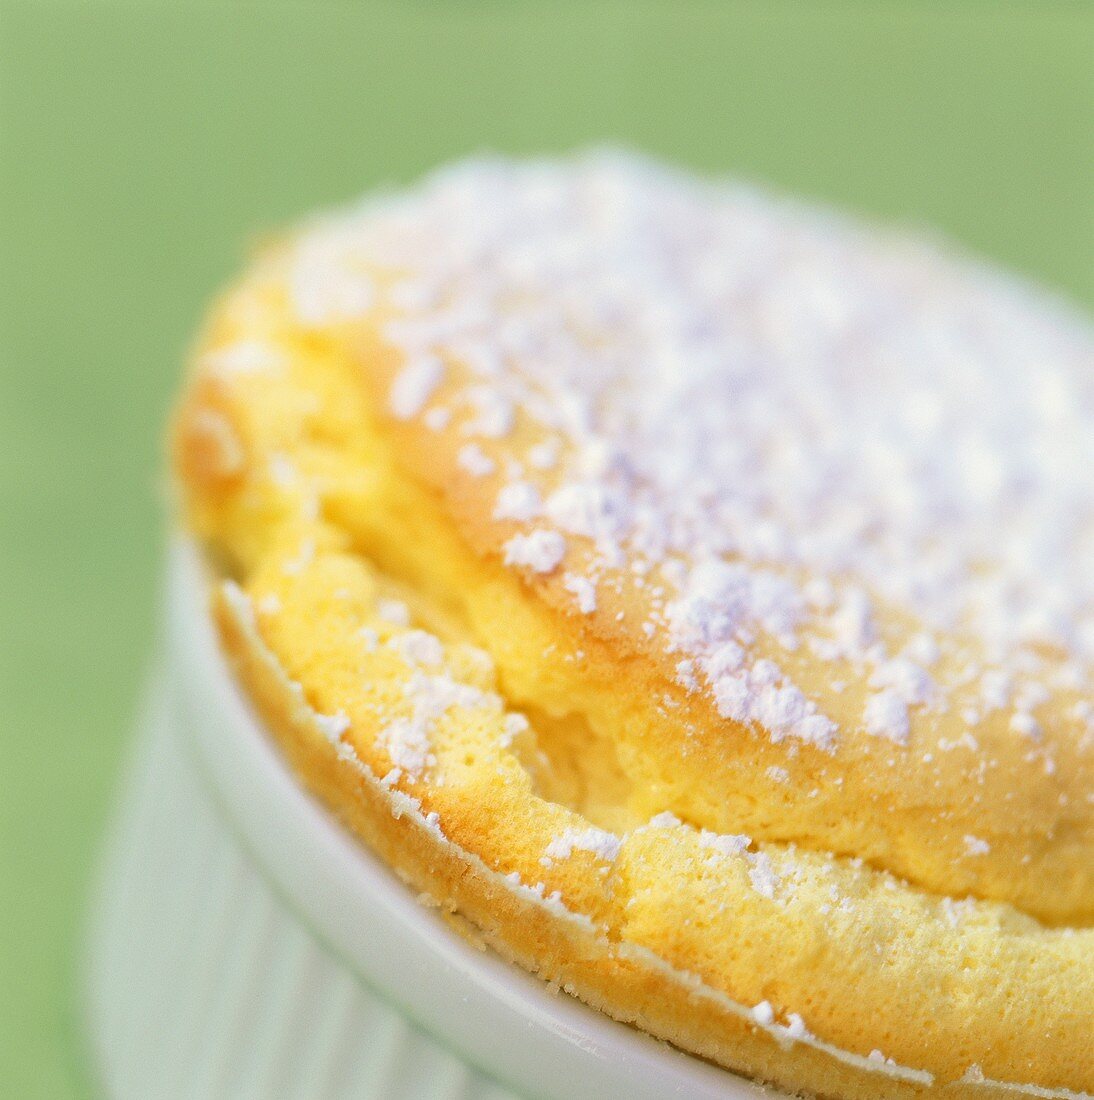 Vanilla soufflé with icing sugar (close-up)